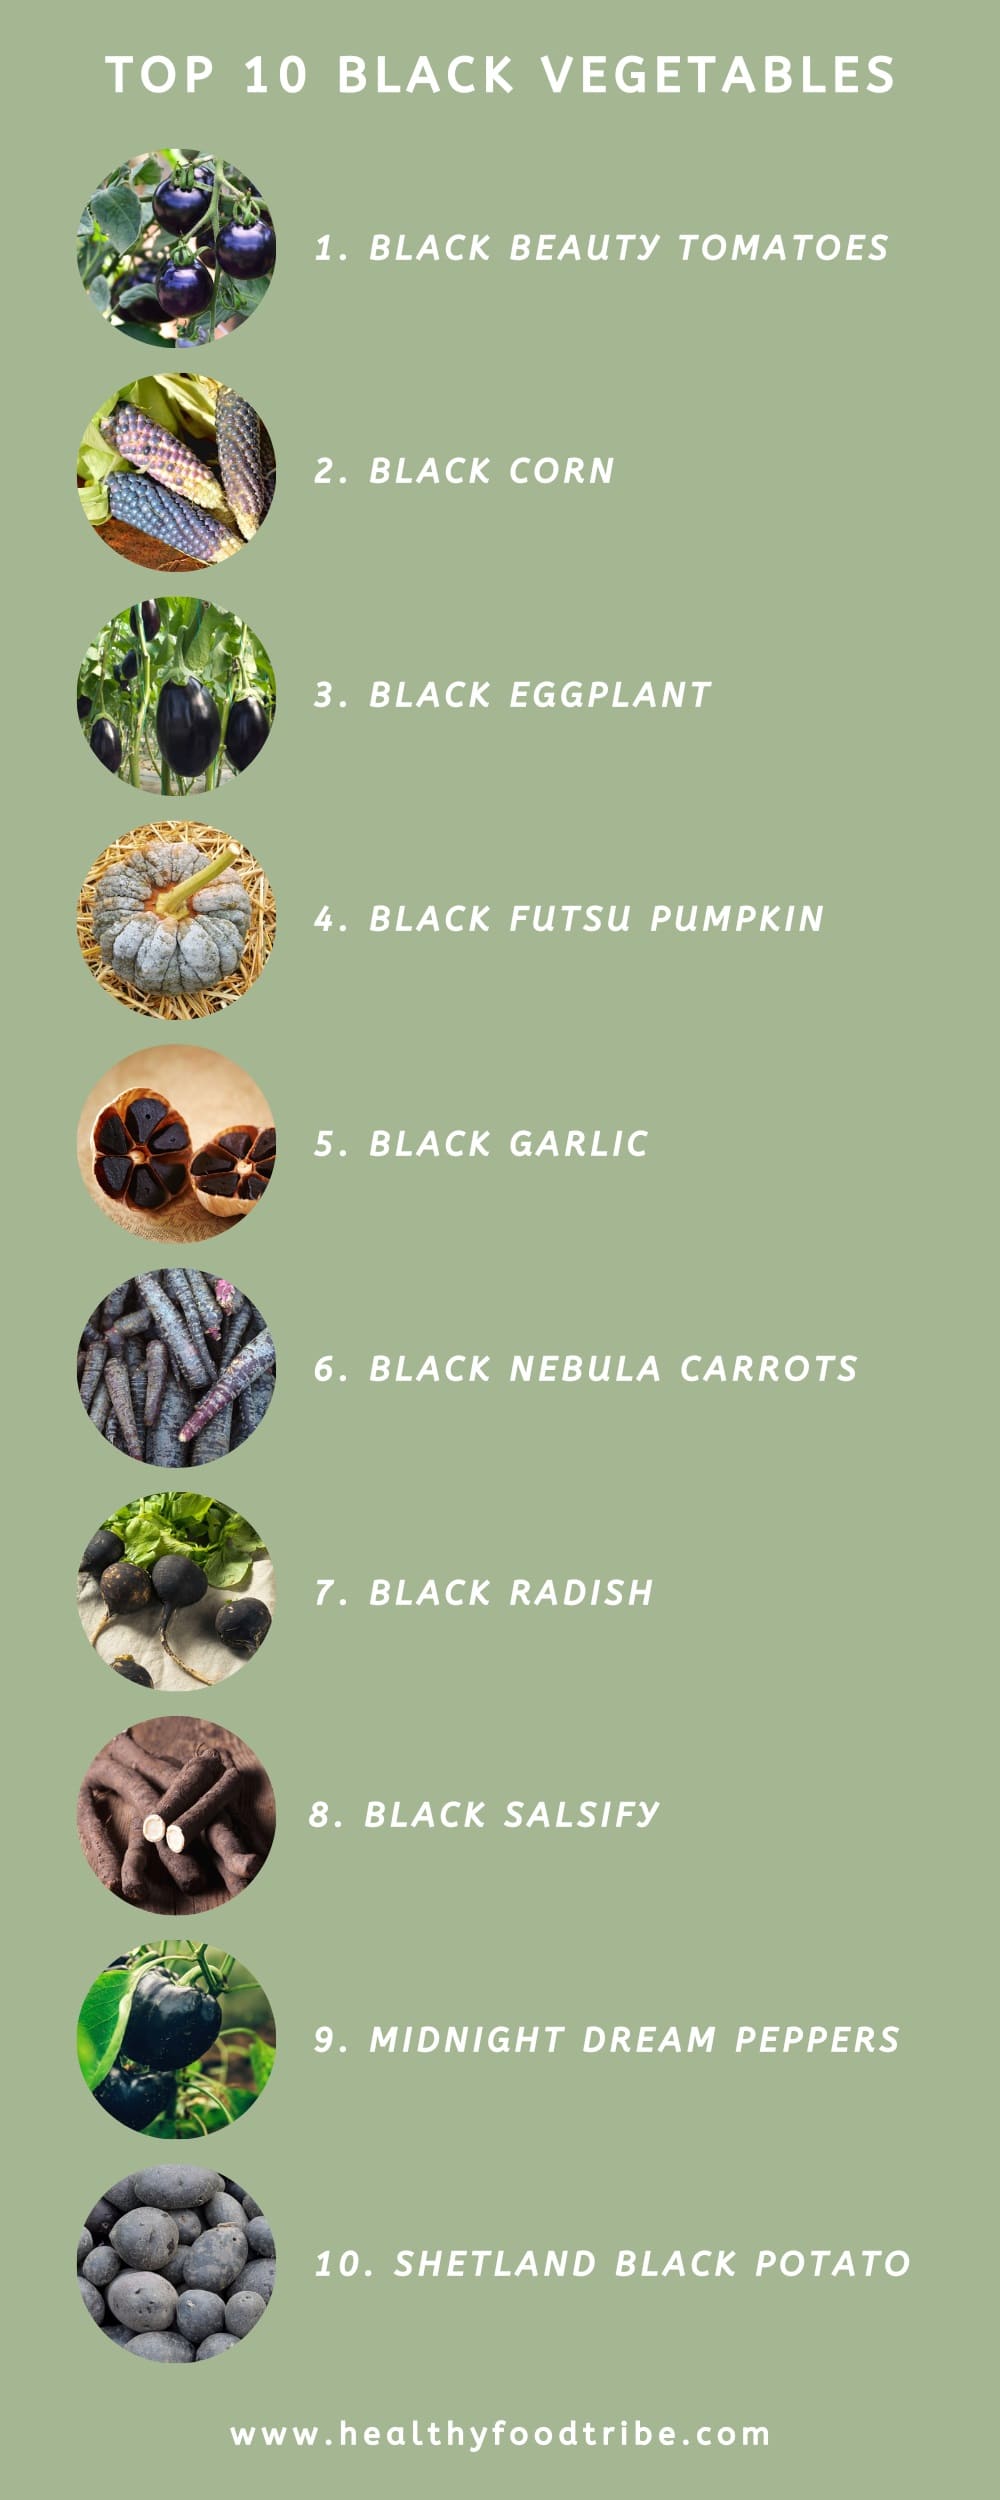 List of black vegetables